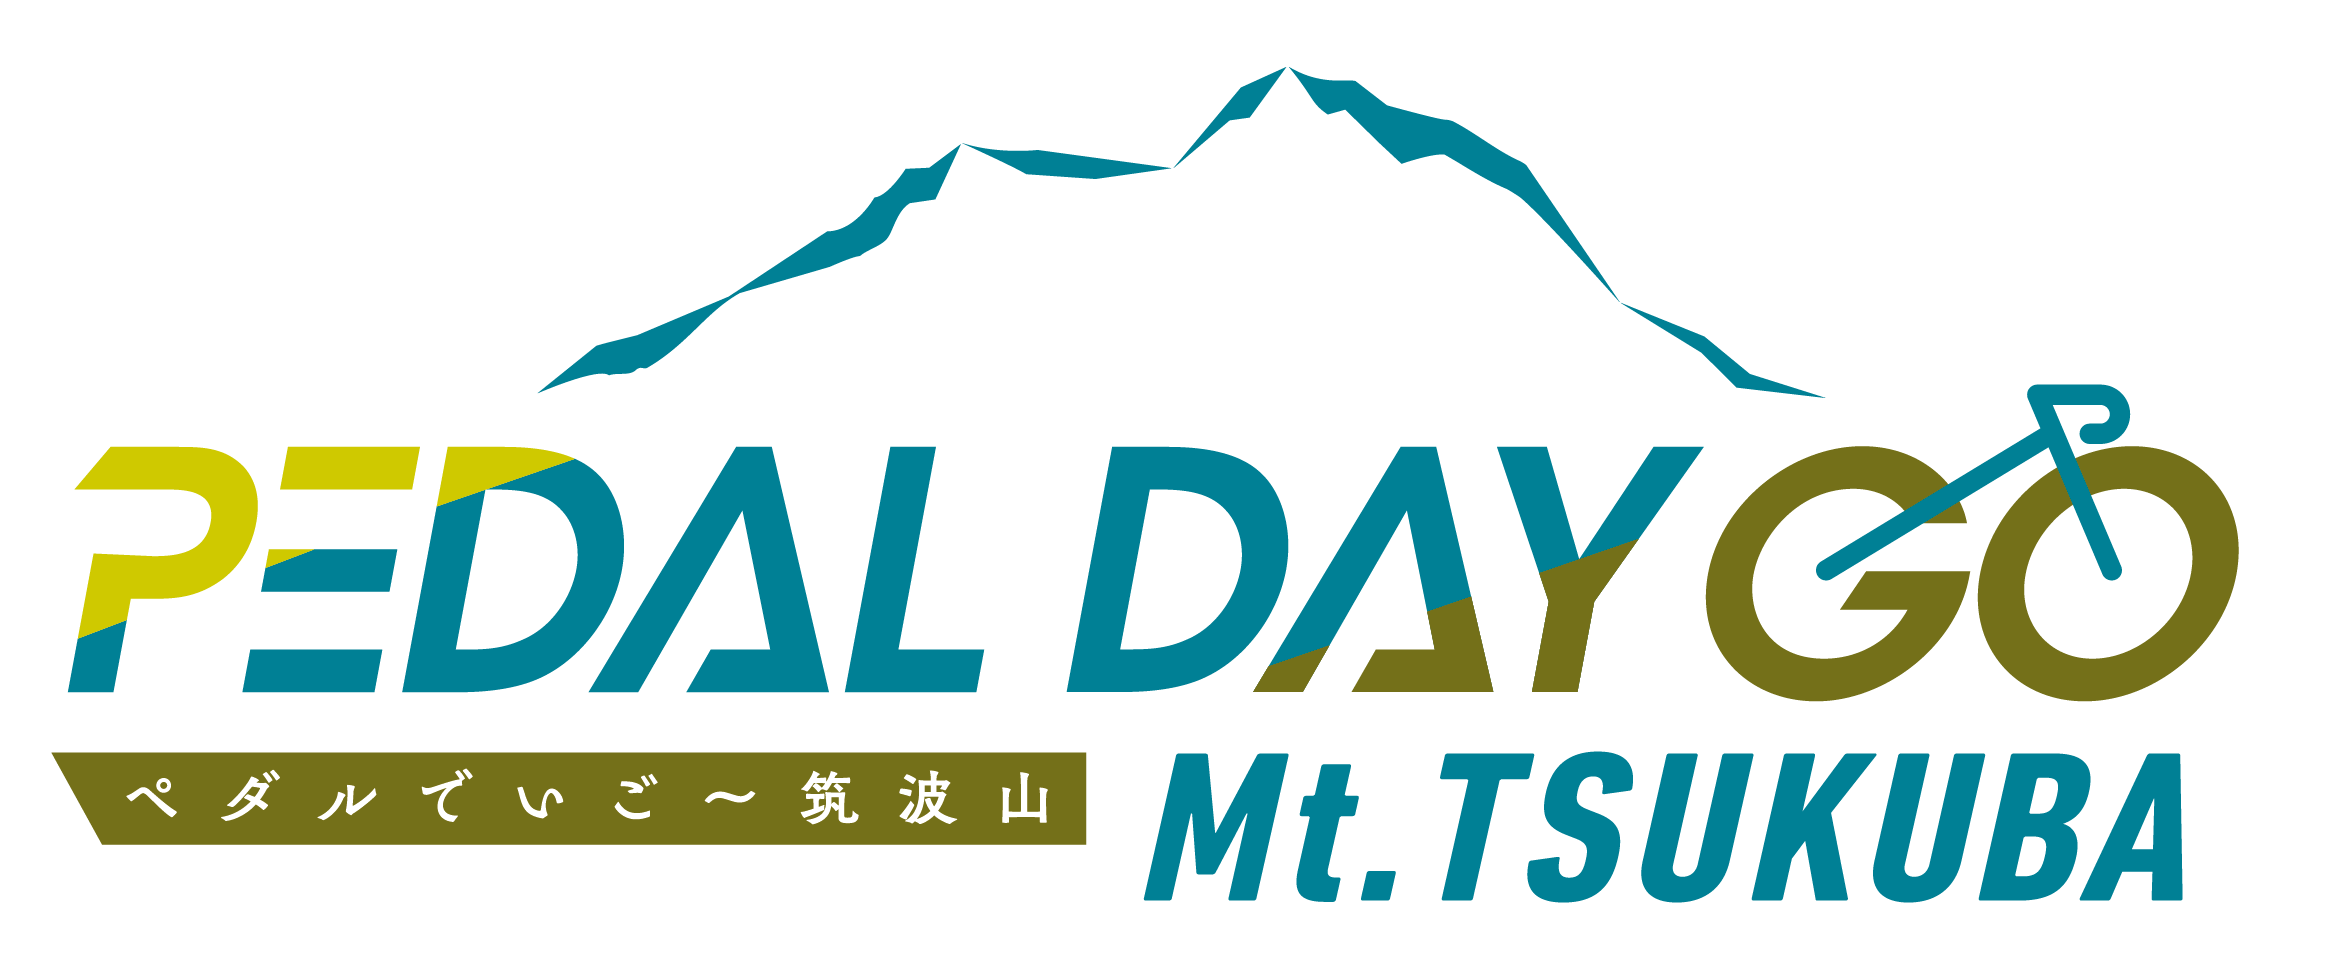 PEDAL DAY GO Mt. TSUKUBA -ペダルでいご~筑波山-header-logo